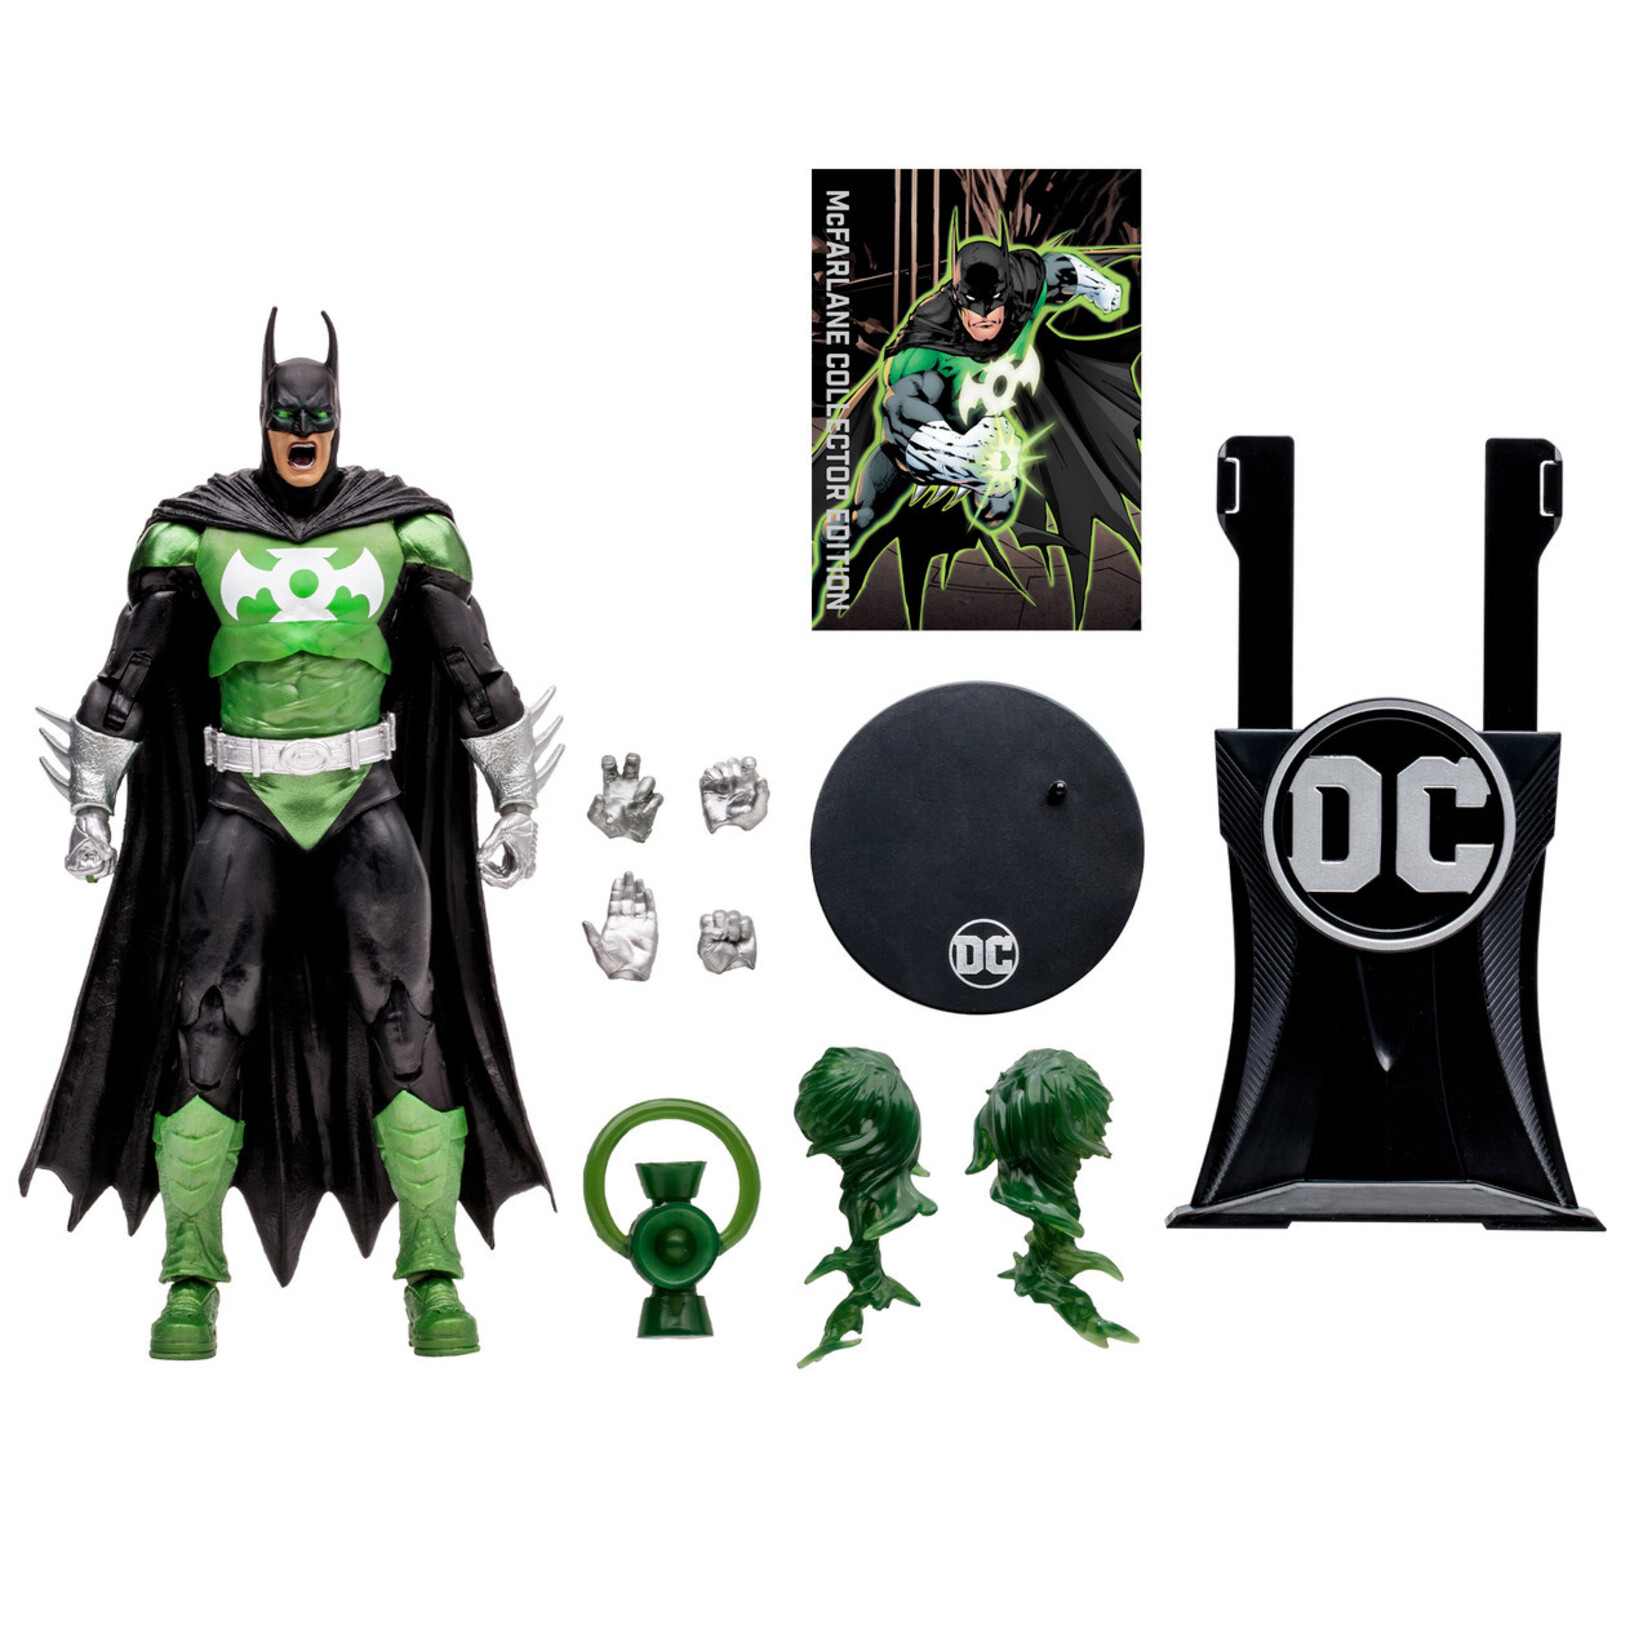 McFarlane Toys McFarlane Toys DC Comics Batman as Green Lantern Collector Edition Action Figure 18 cm